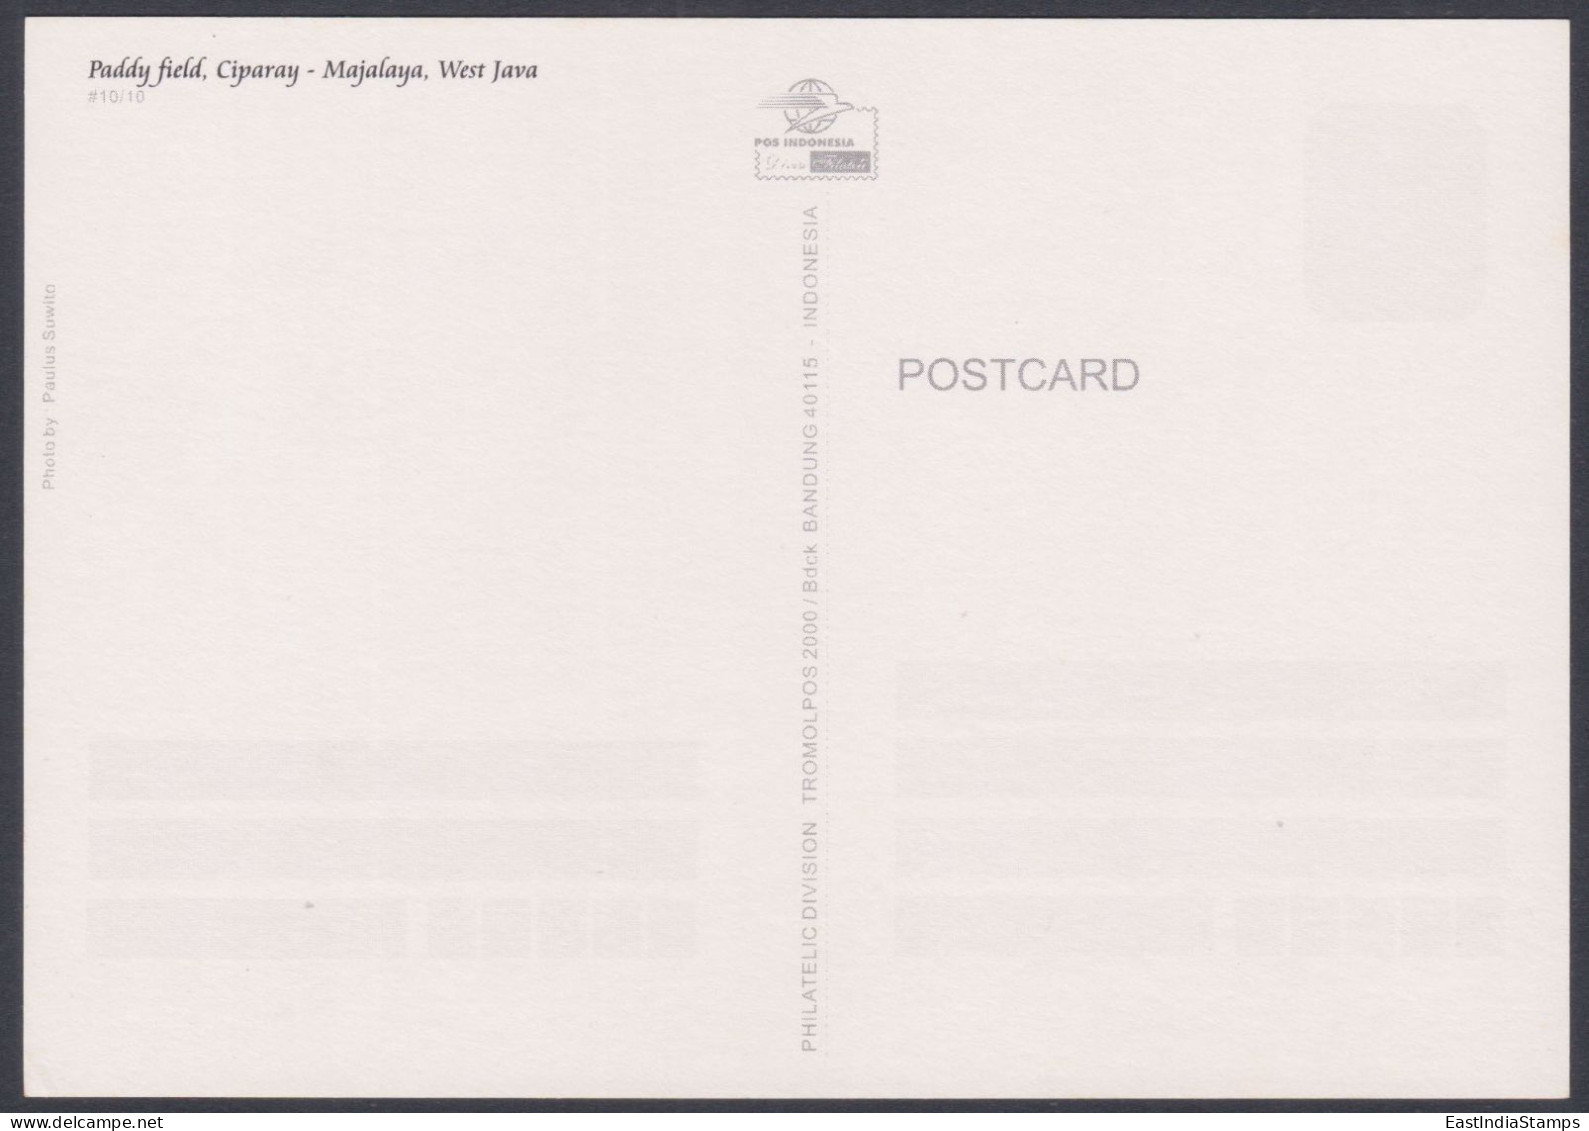 Indonesia 2000 Mint Postcard Paddy Field, Ciparay, Majalaya, West Java, Rice, Agriculture, Farm, Farming, Hill, Mountain - Indonesia